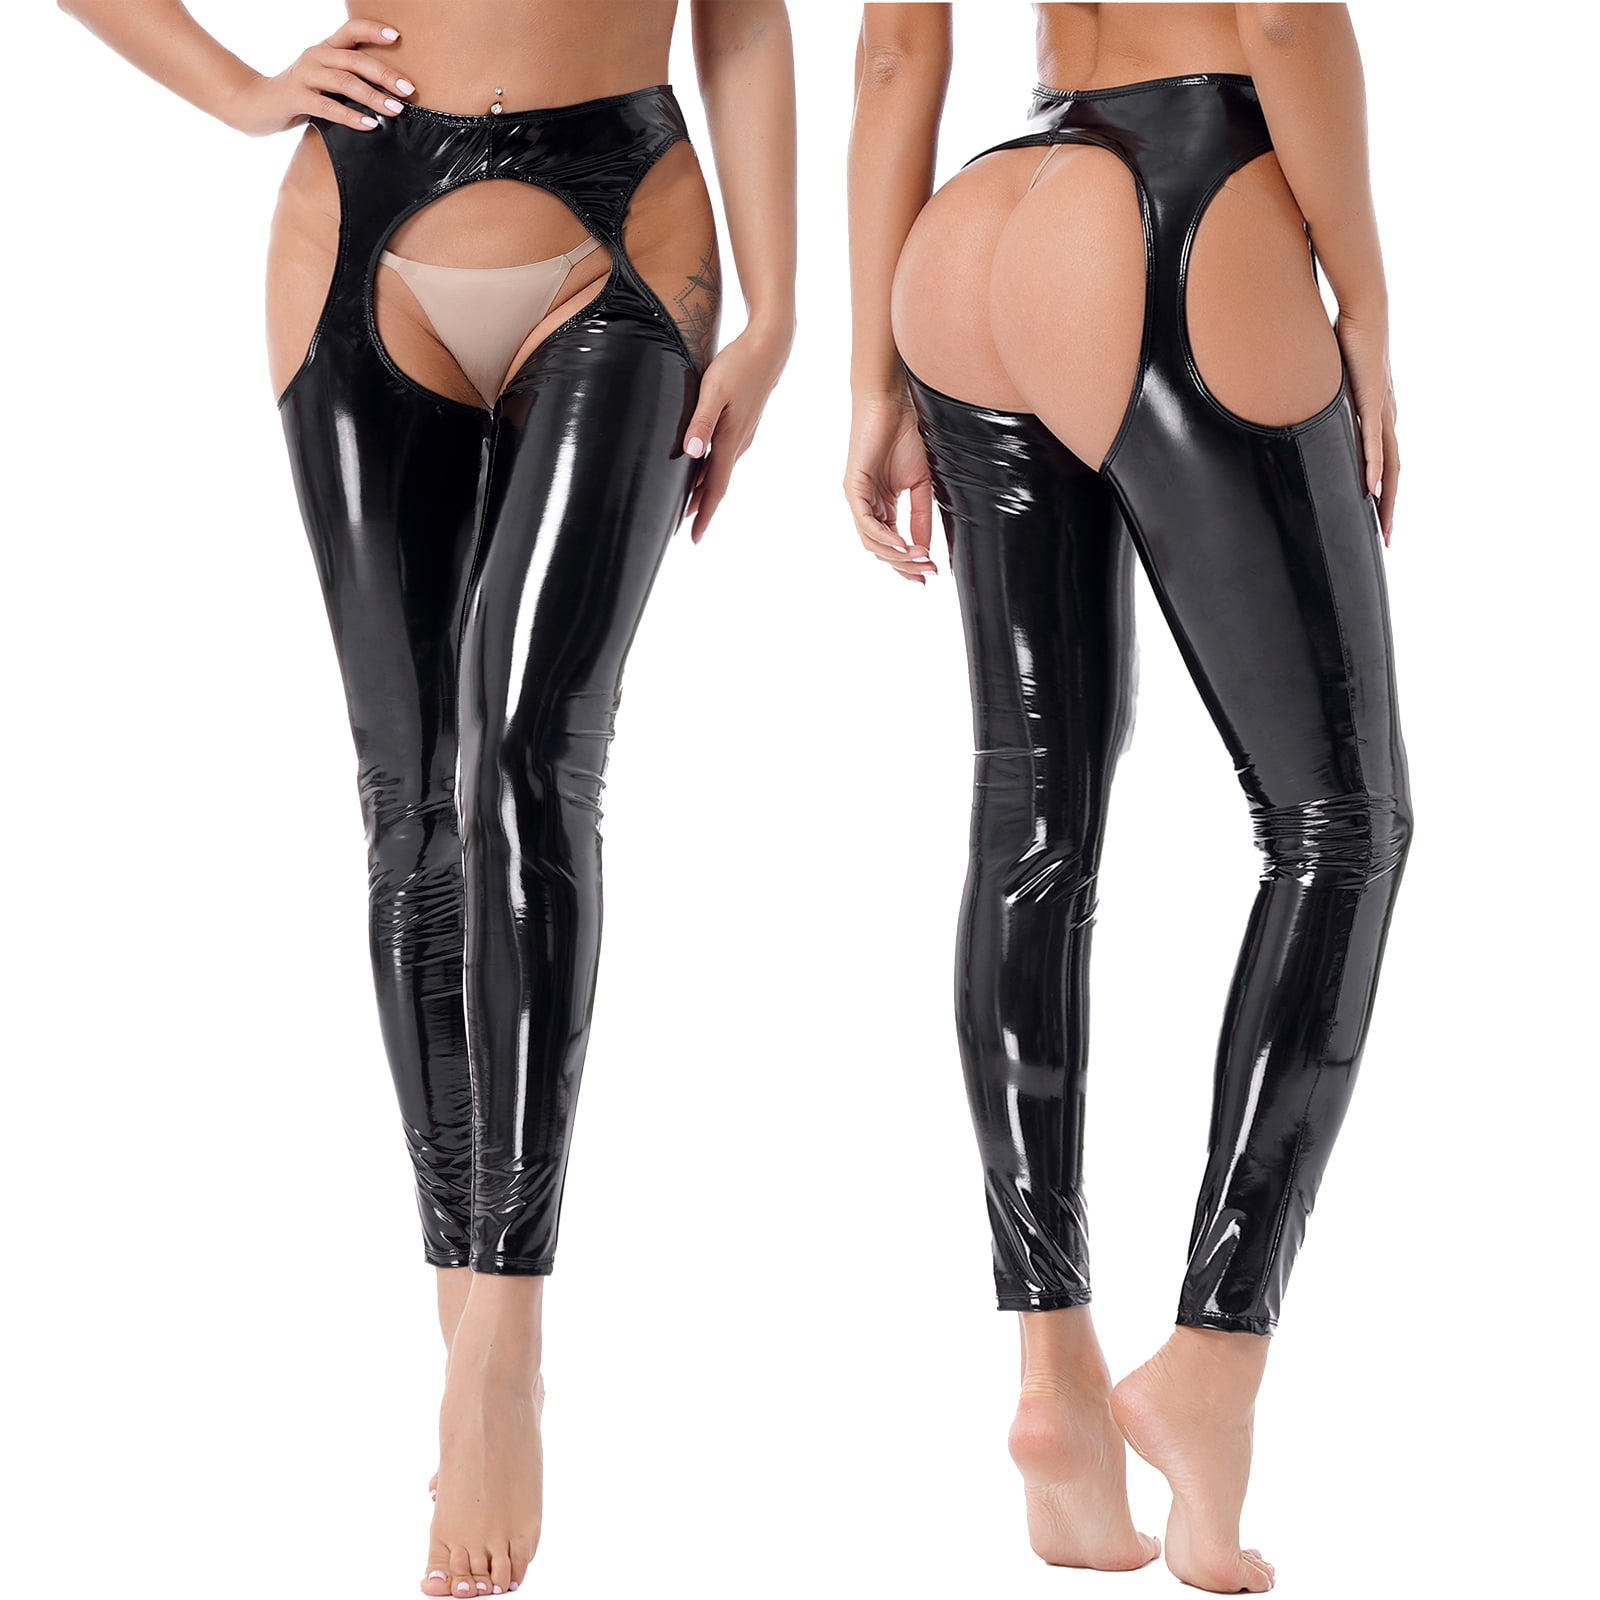 YONGHS Women's Patent Leather Hollowing Out Bottoms Leggings Long Assless  Chaps Pants Black M 